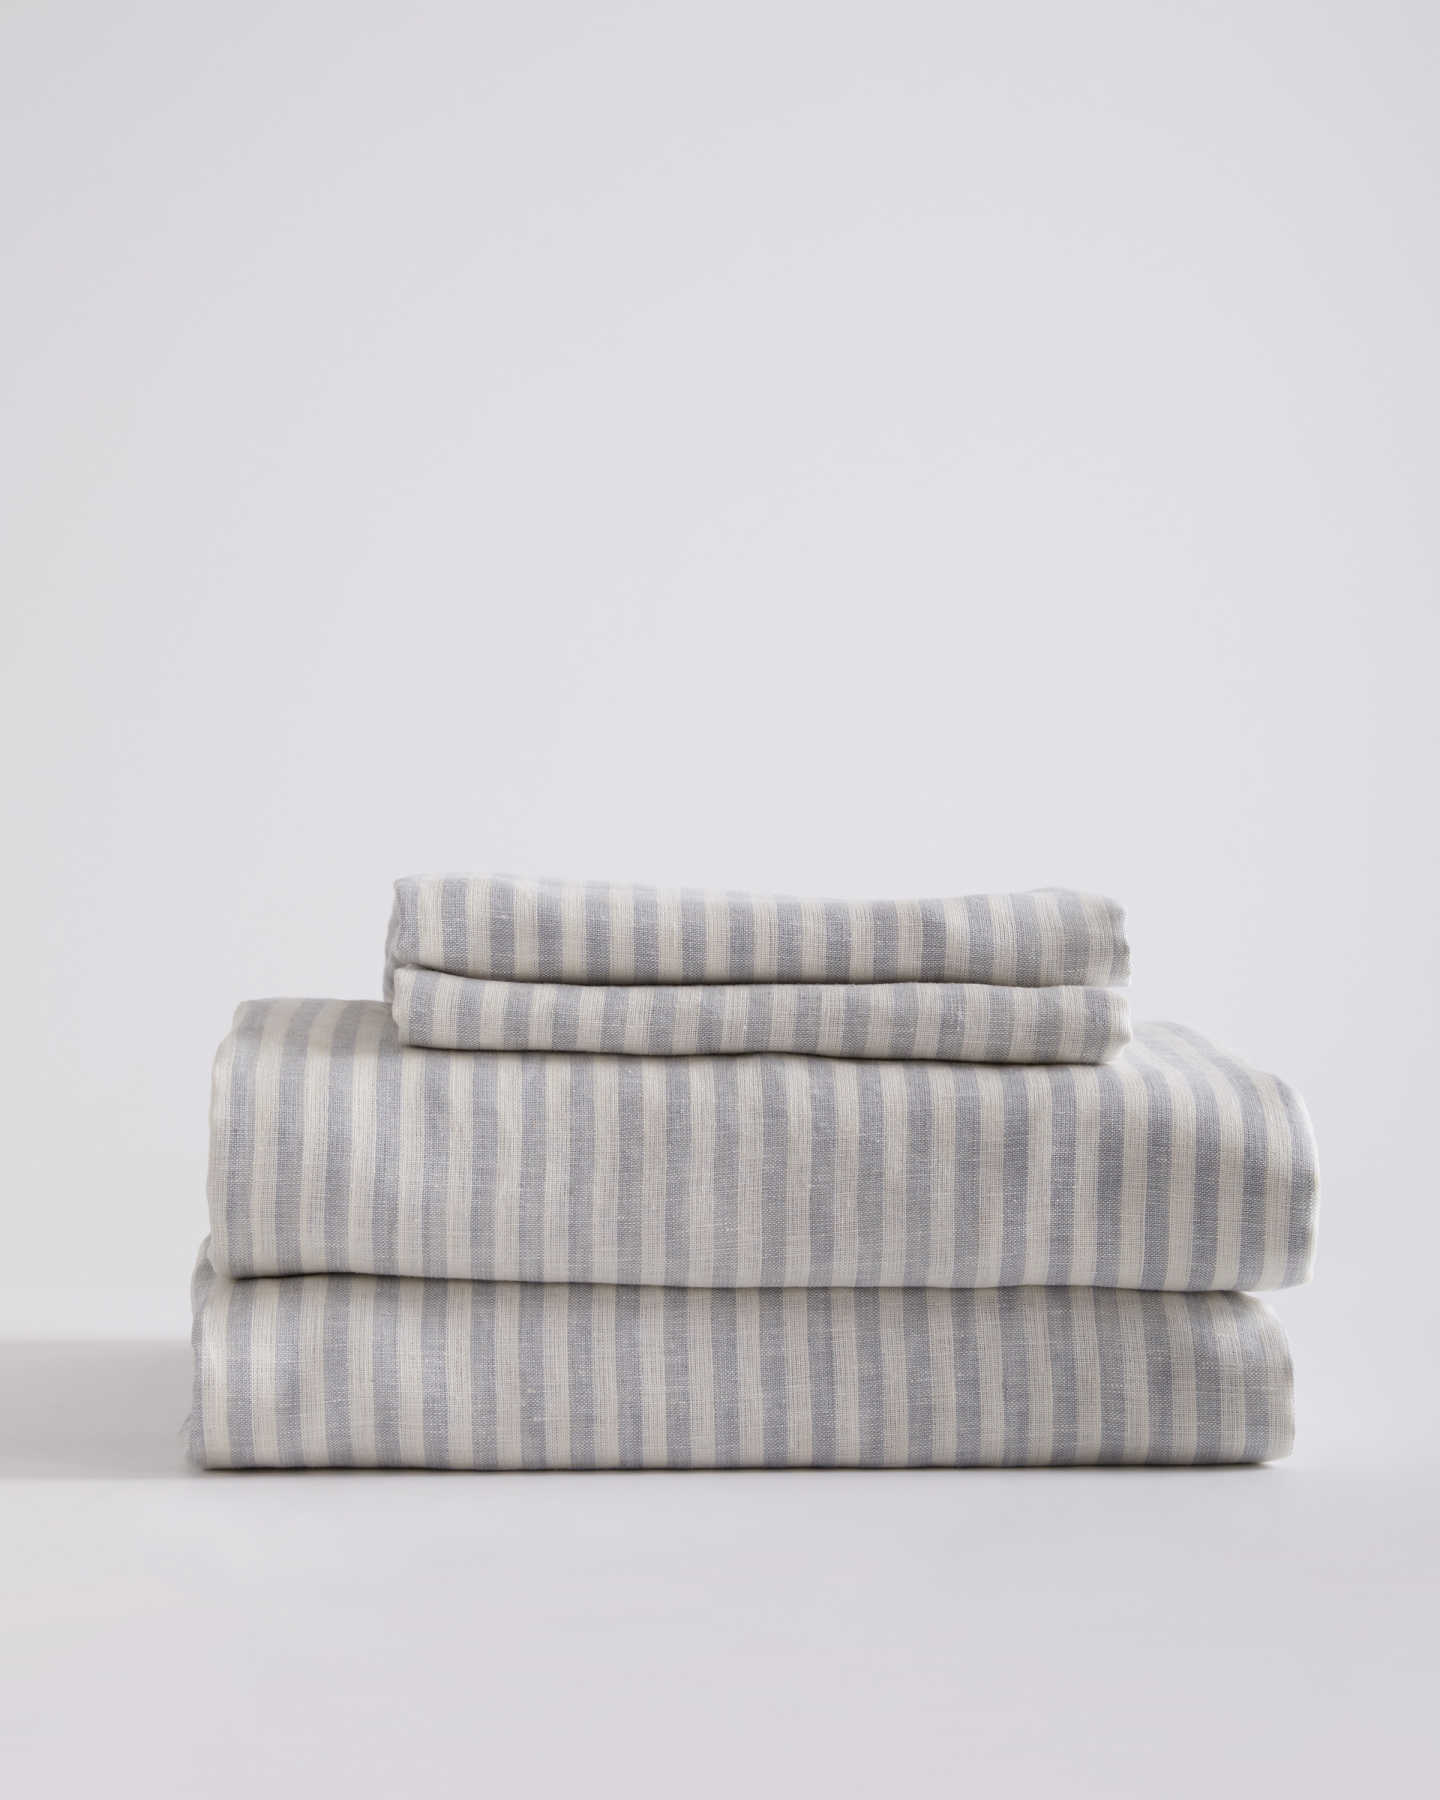 You May Also Like - European Linen Stripe Sheet Set - Mist/White